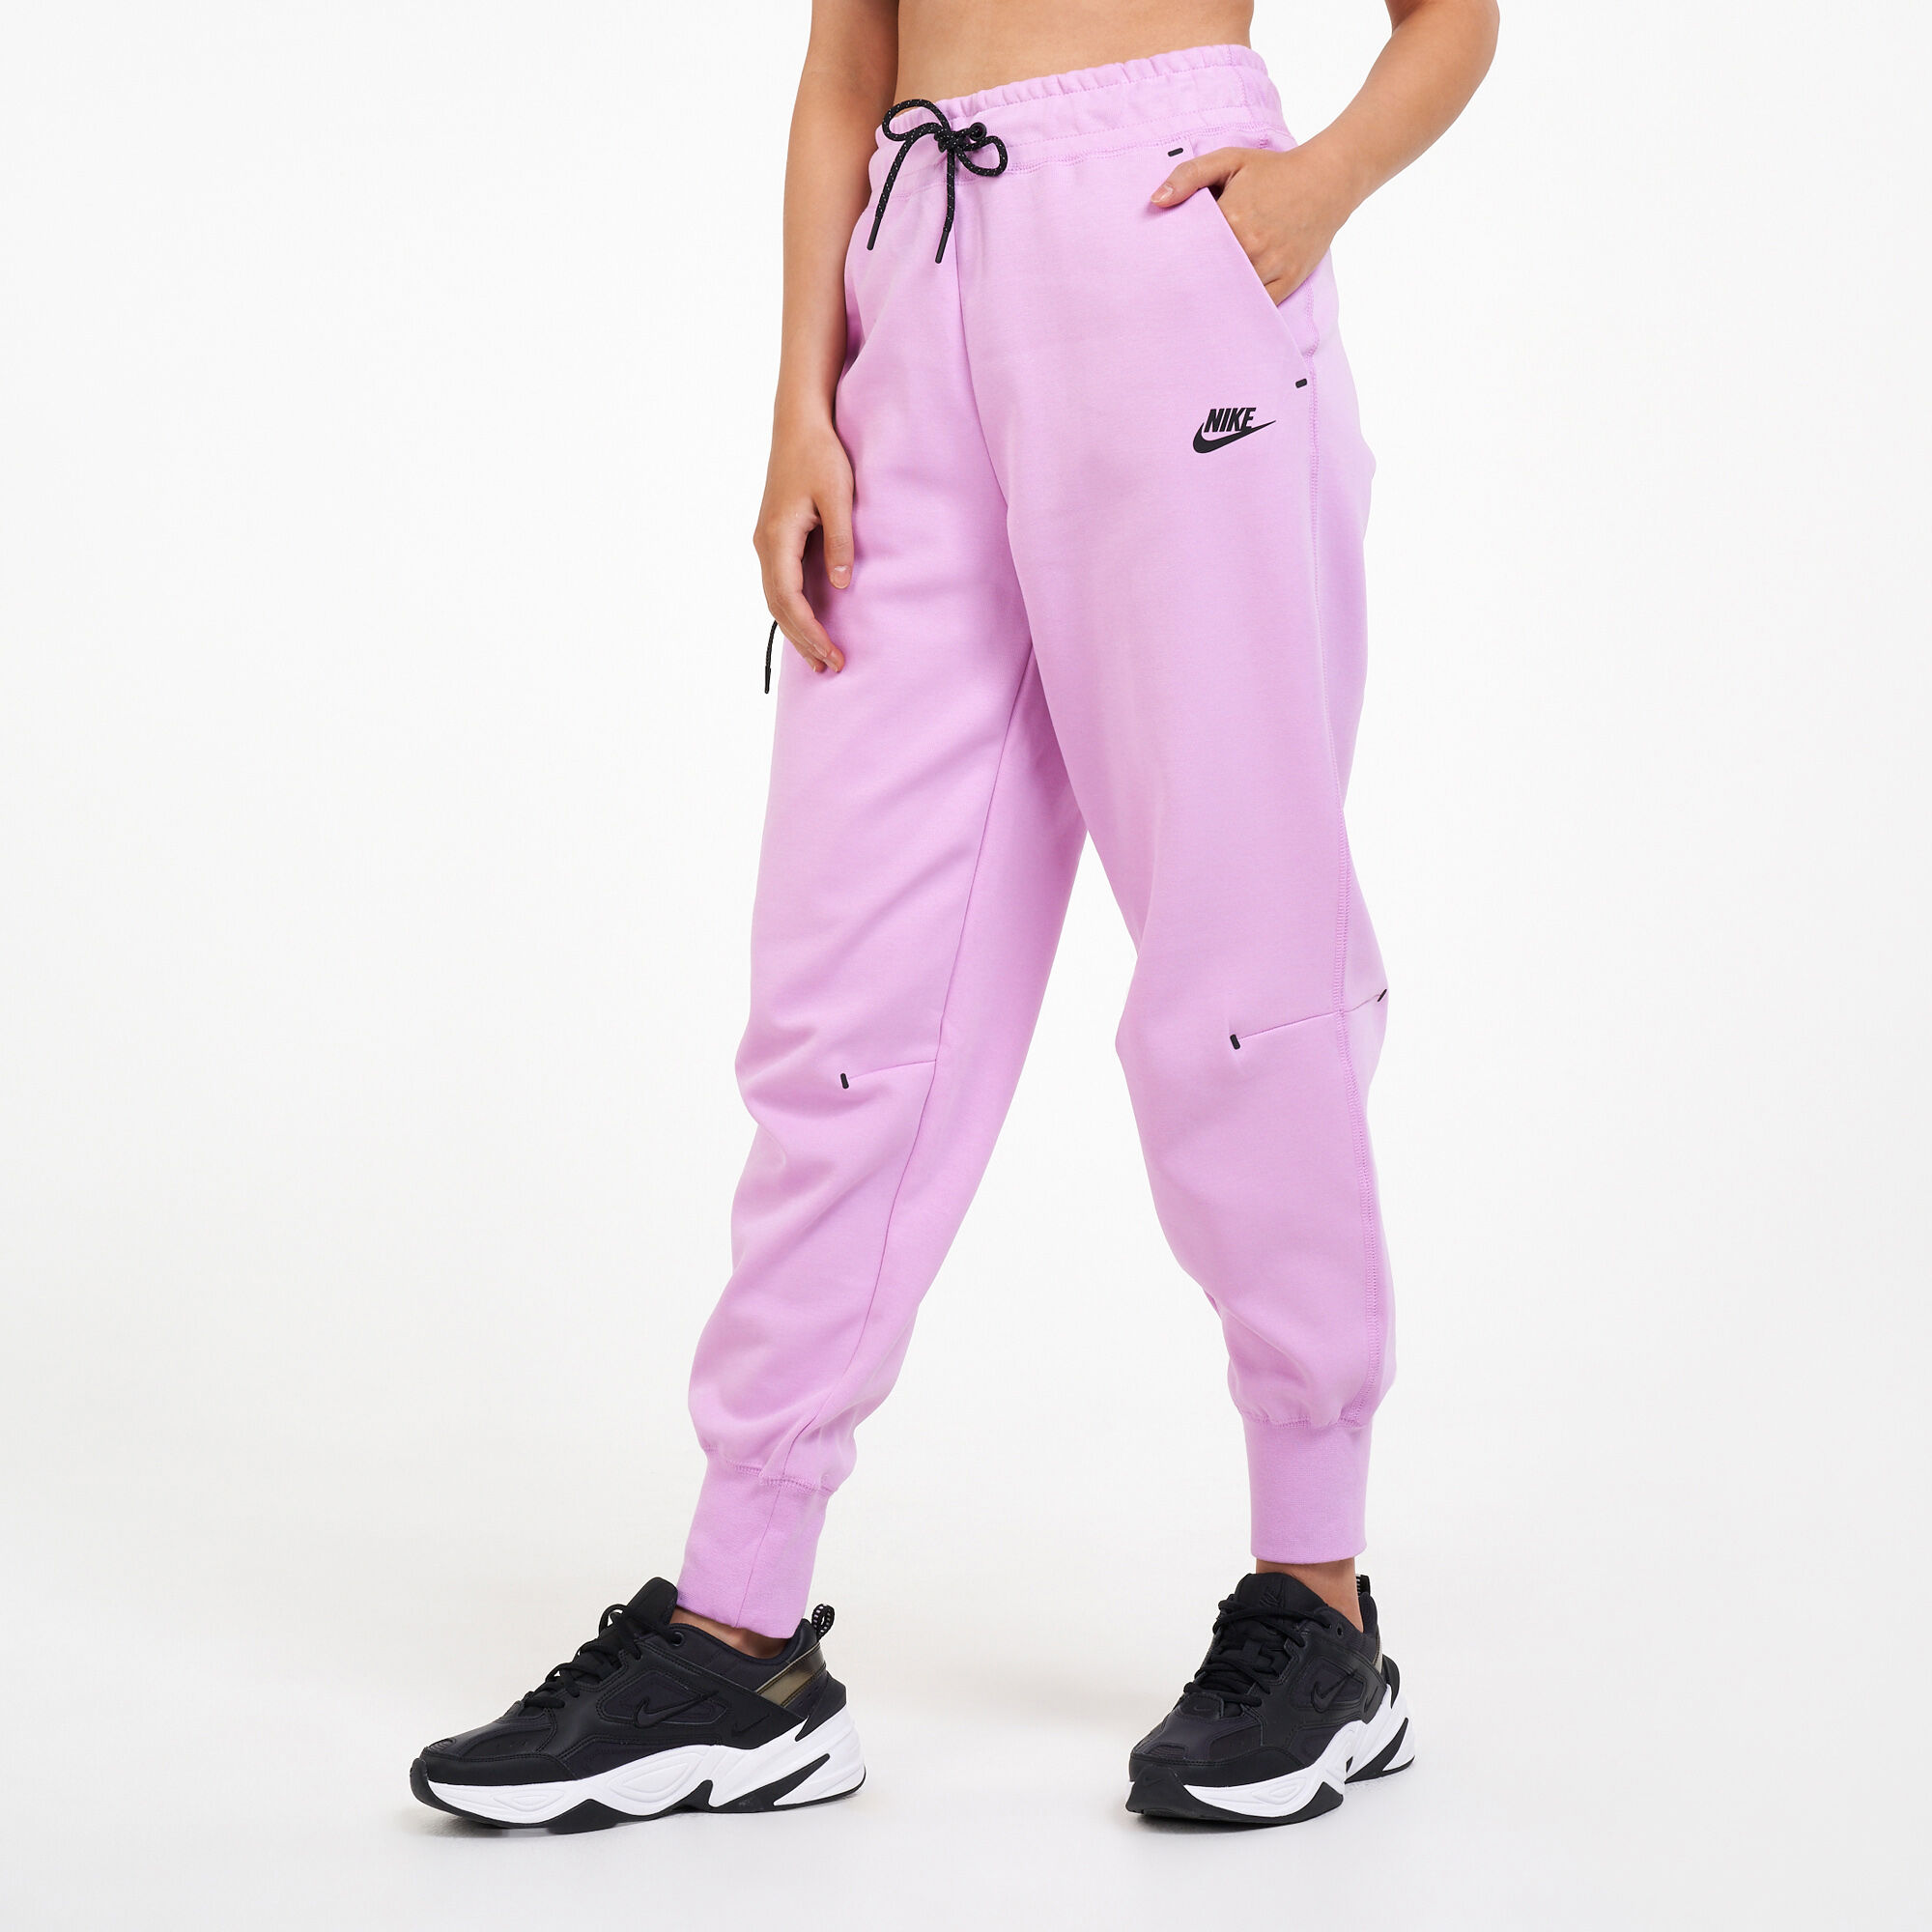 NWT Nike Women's Sportswear Tech Fleece Pants Burgundy CW4292-623 Size Small